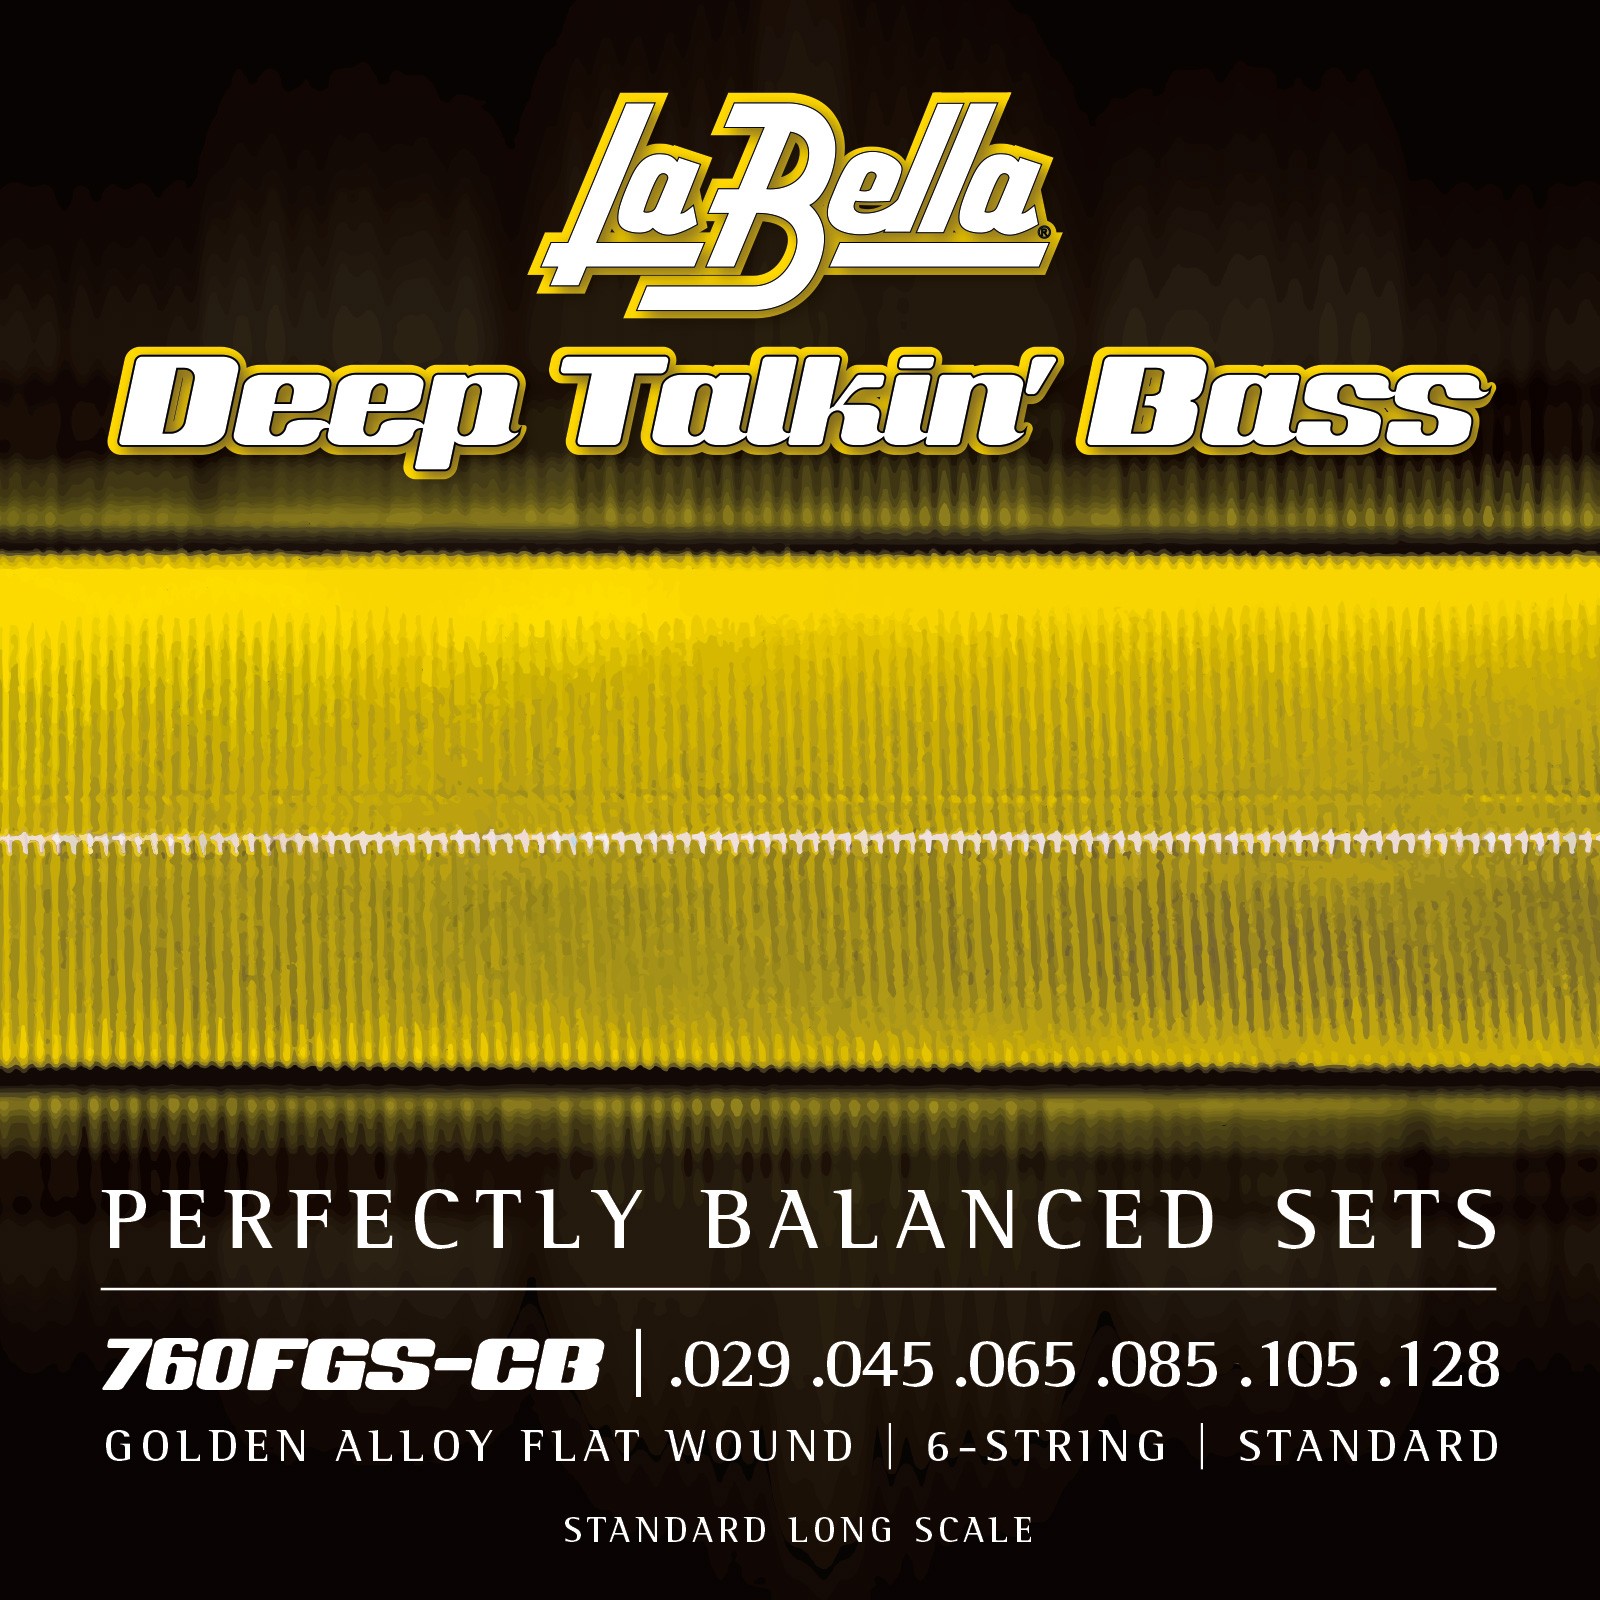 LA BELLA La Bella Deep Talkin' Bass Gold Flats 760FGS-CB | Muta di corde lisce per basso 6 corde, 029-128 760FGS-CB